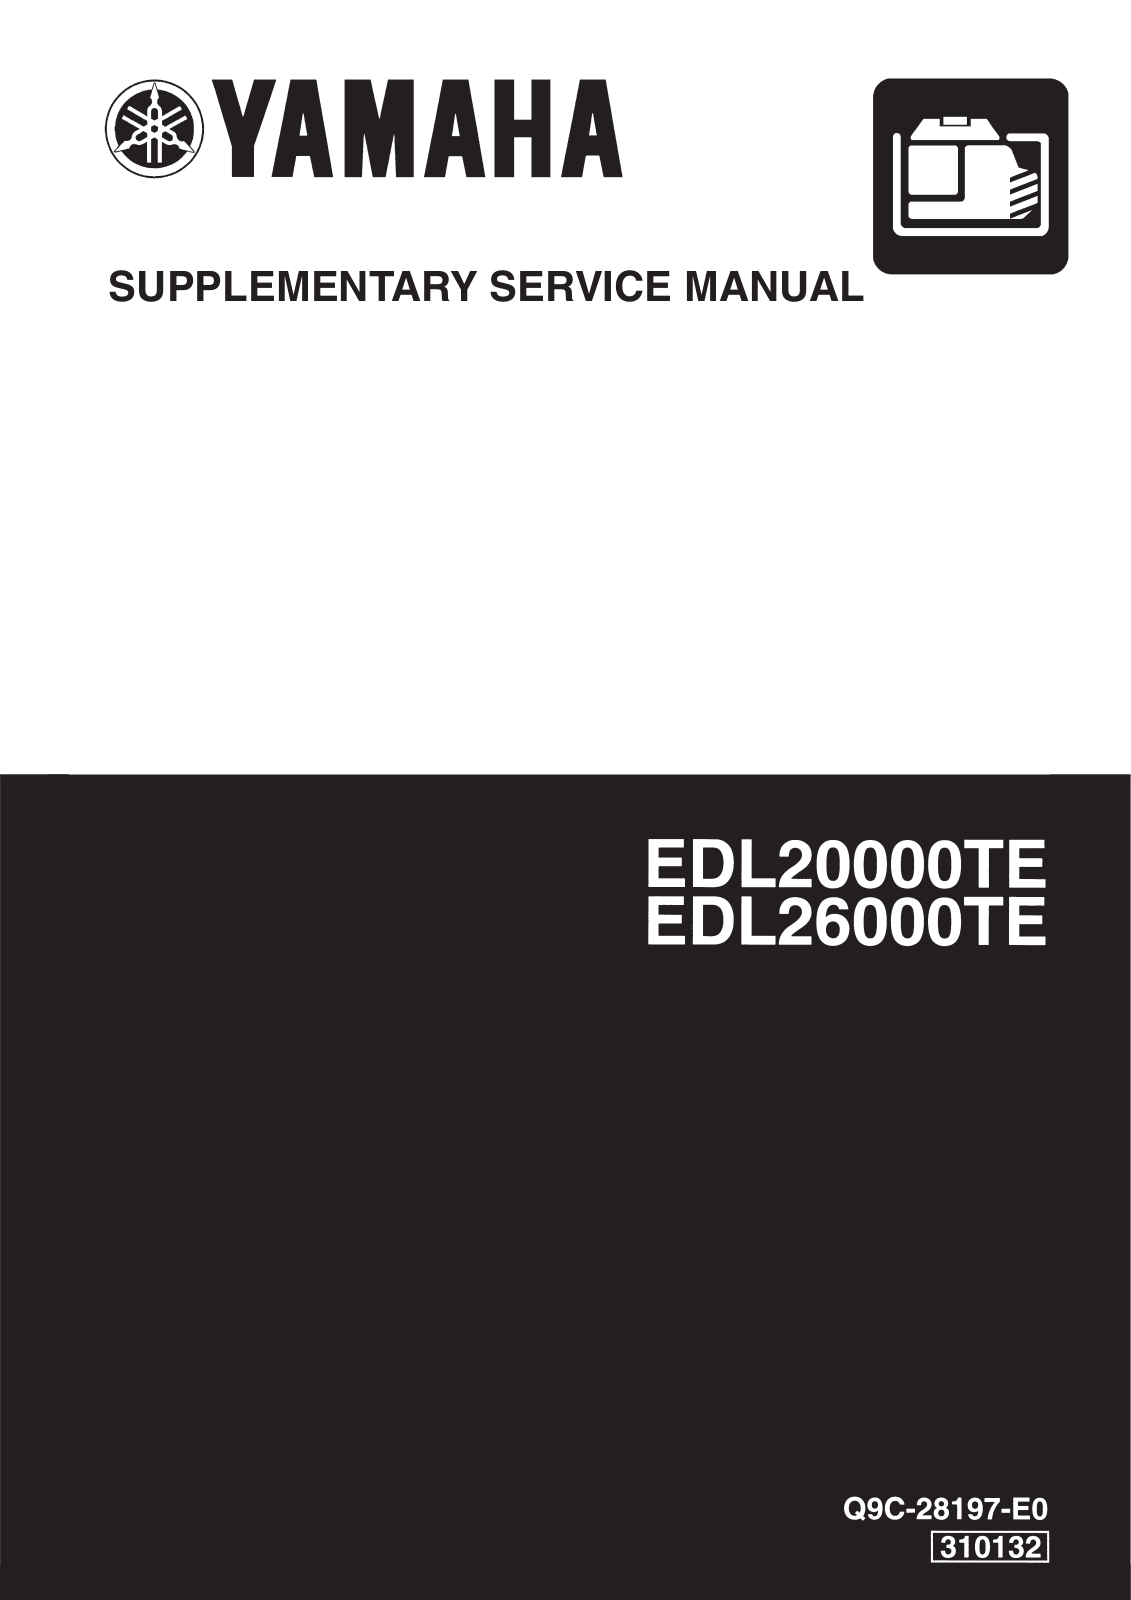 YAMAHA EDL20000TE, EDL26000TE SERVICE MANUAL